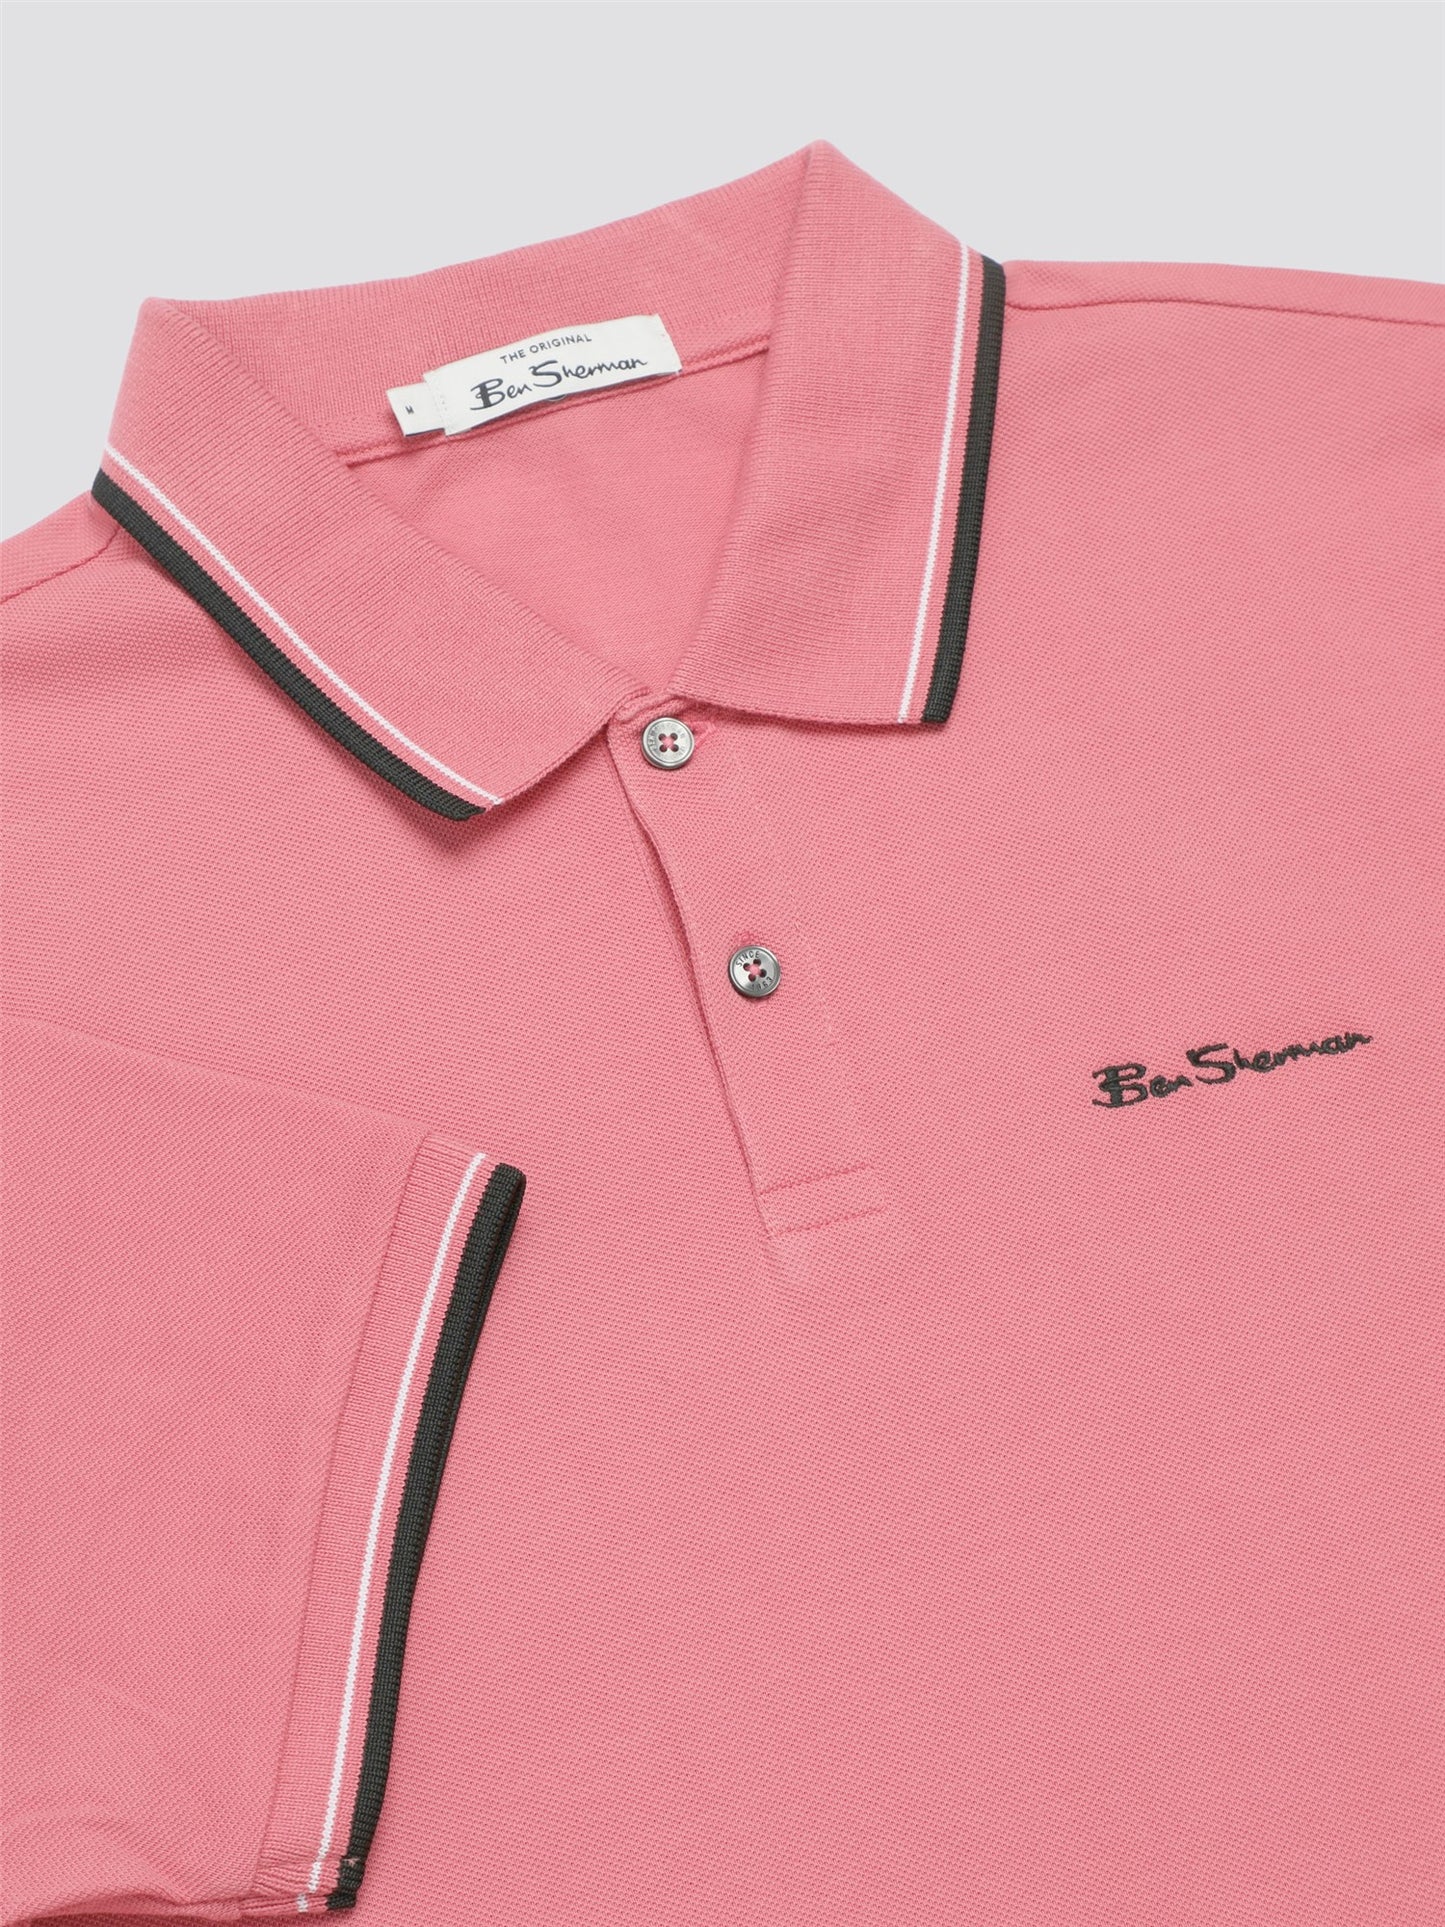 Ben Sherman Men's 0077487 SS Signature Polo Shirt Dark Pink